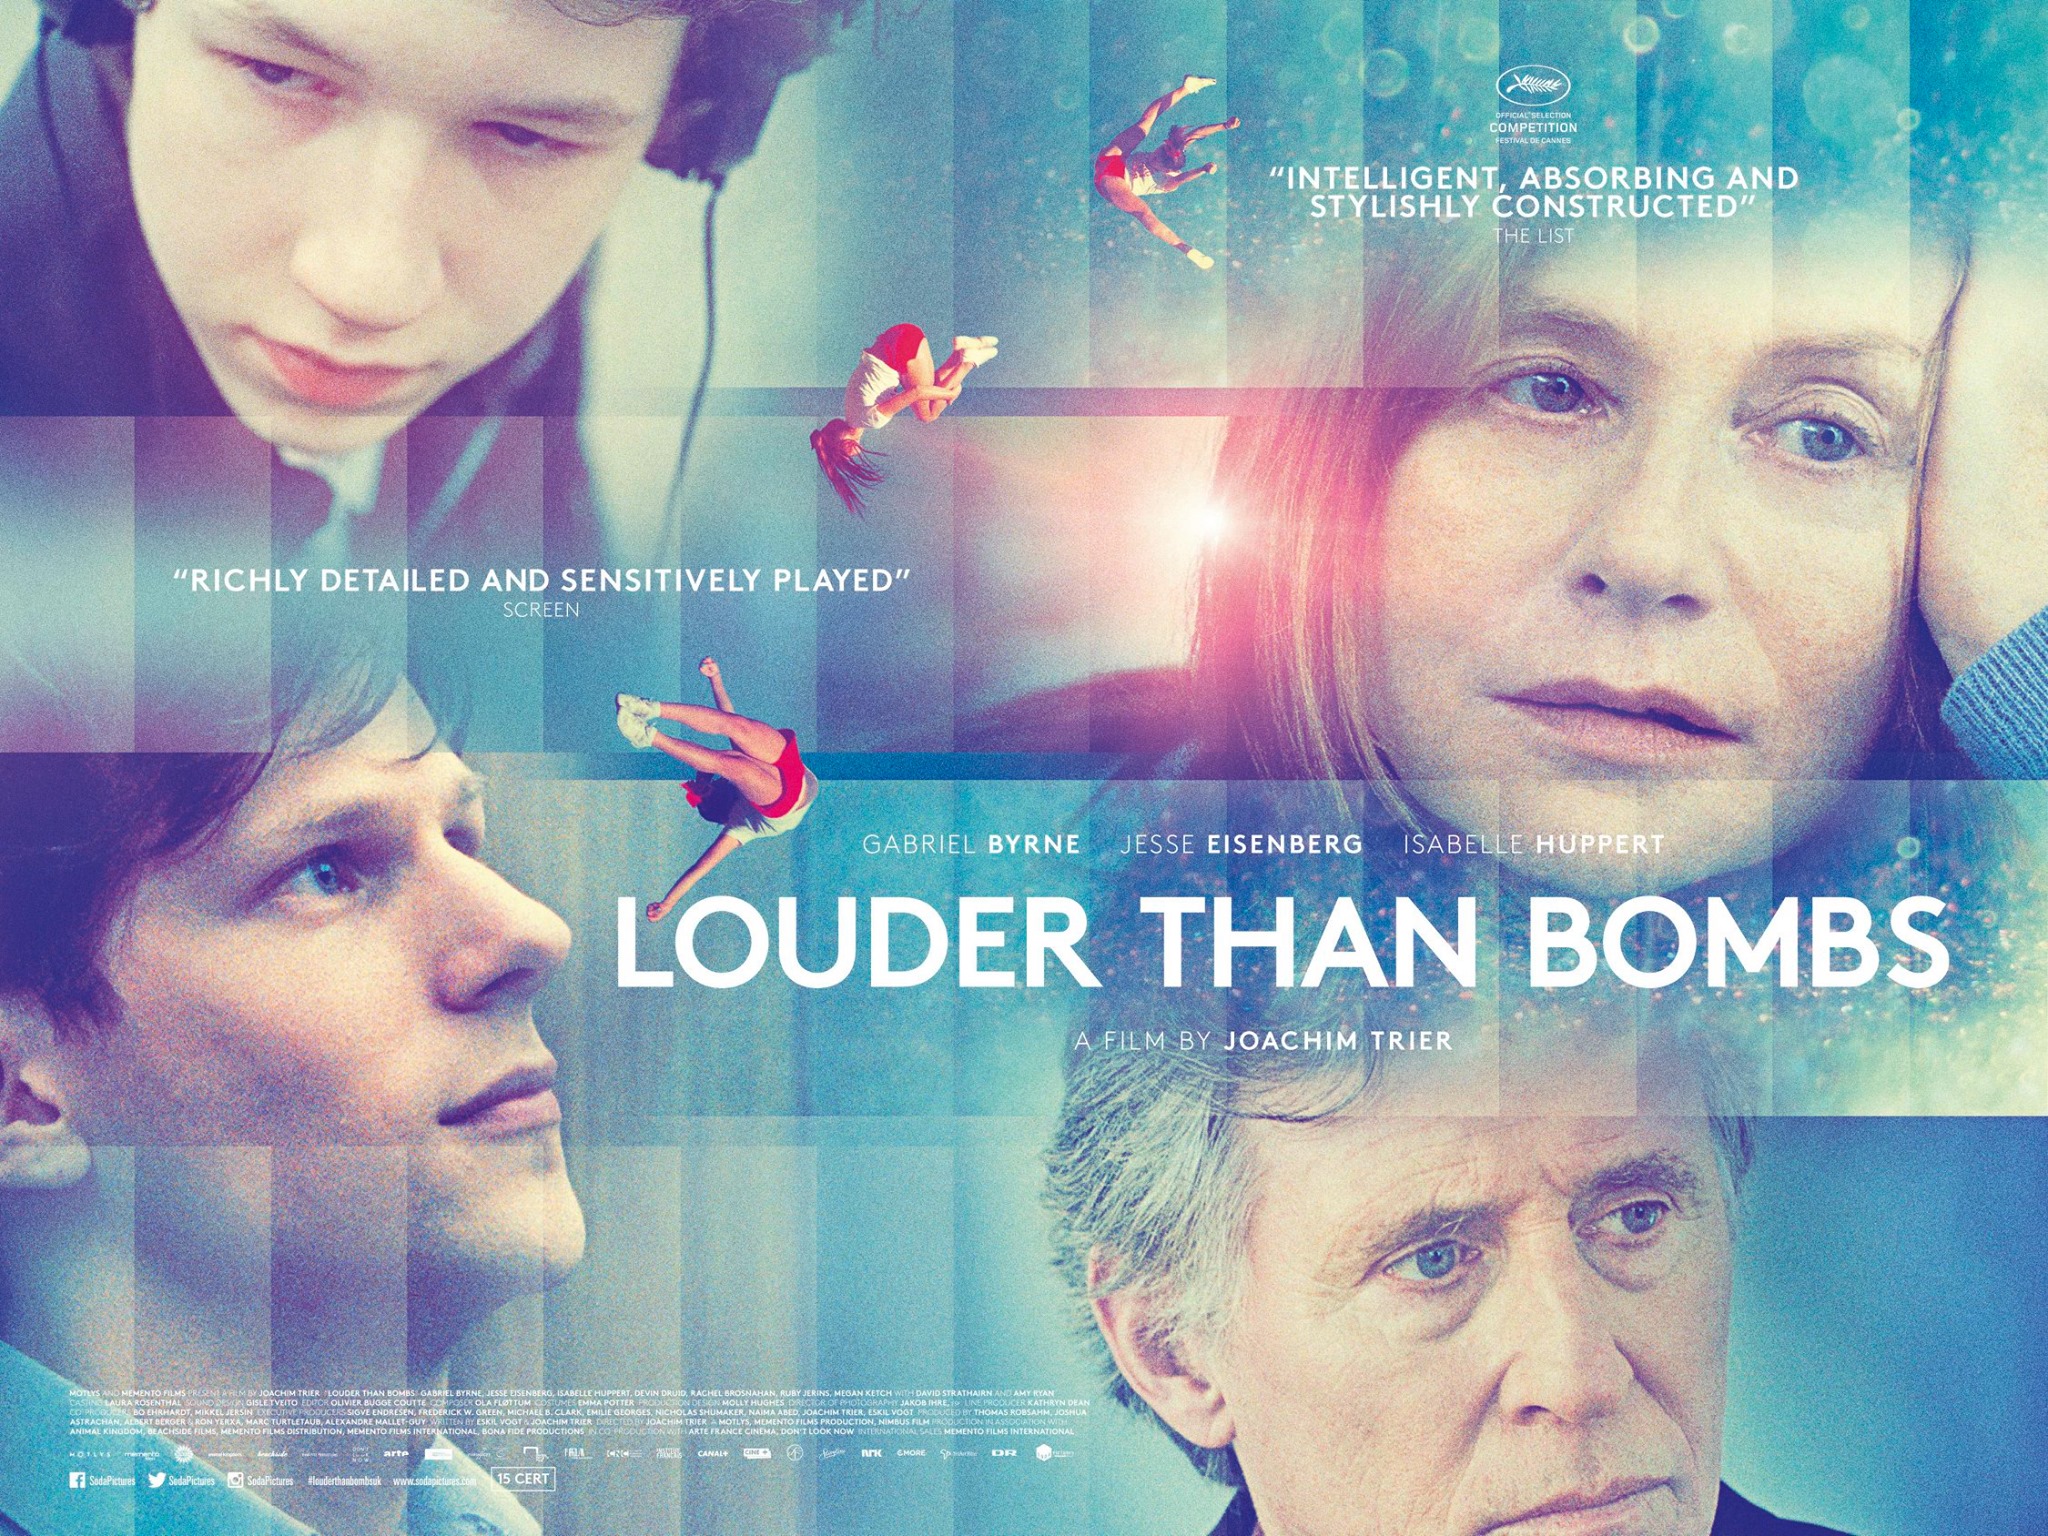 Louder than bombs (2015)dvdplanetstorepk